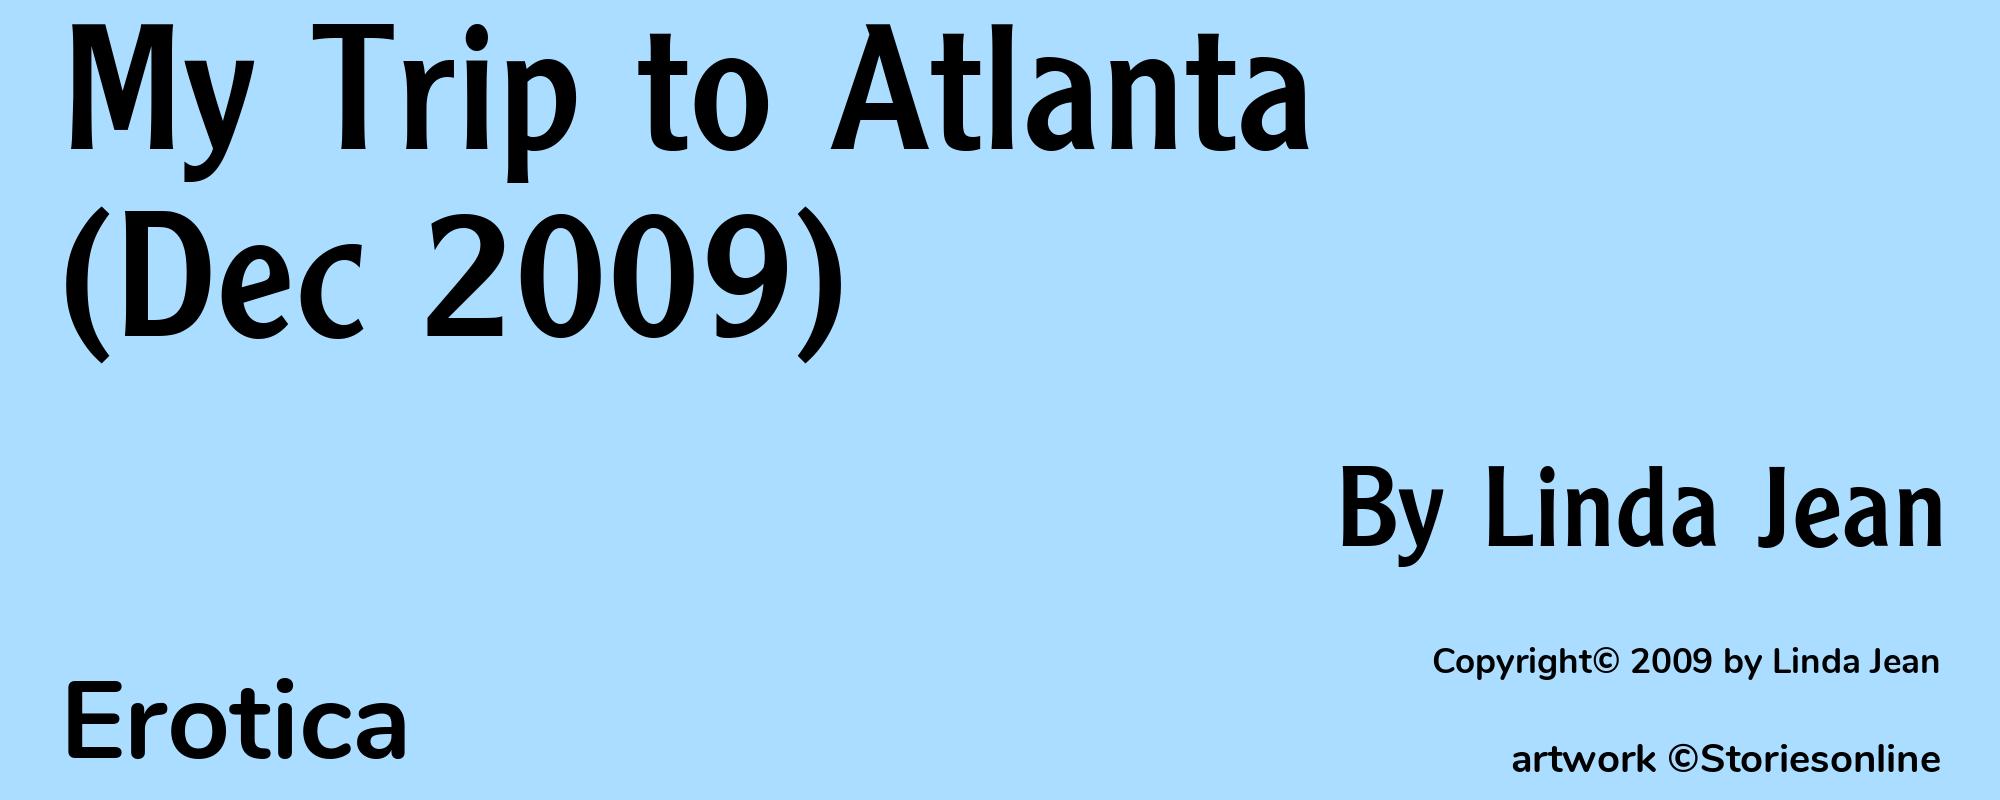 My Trip to Atlanta (Dec 2009) - Cover